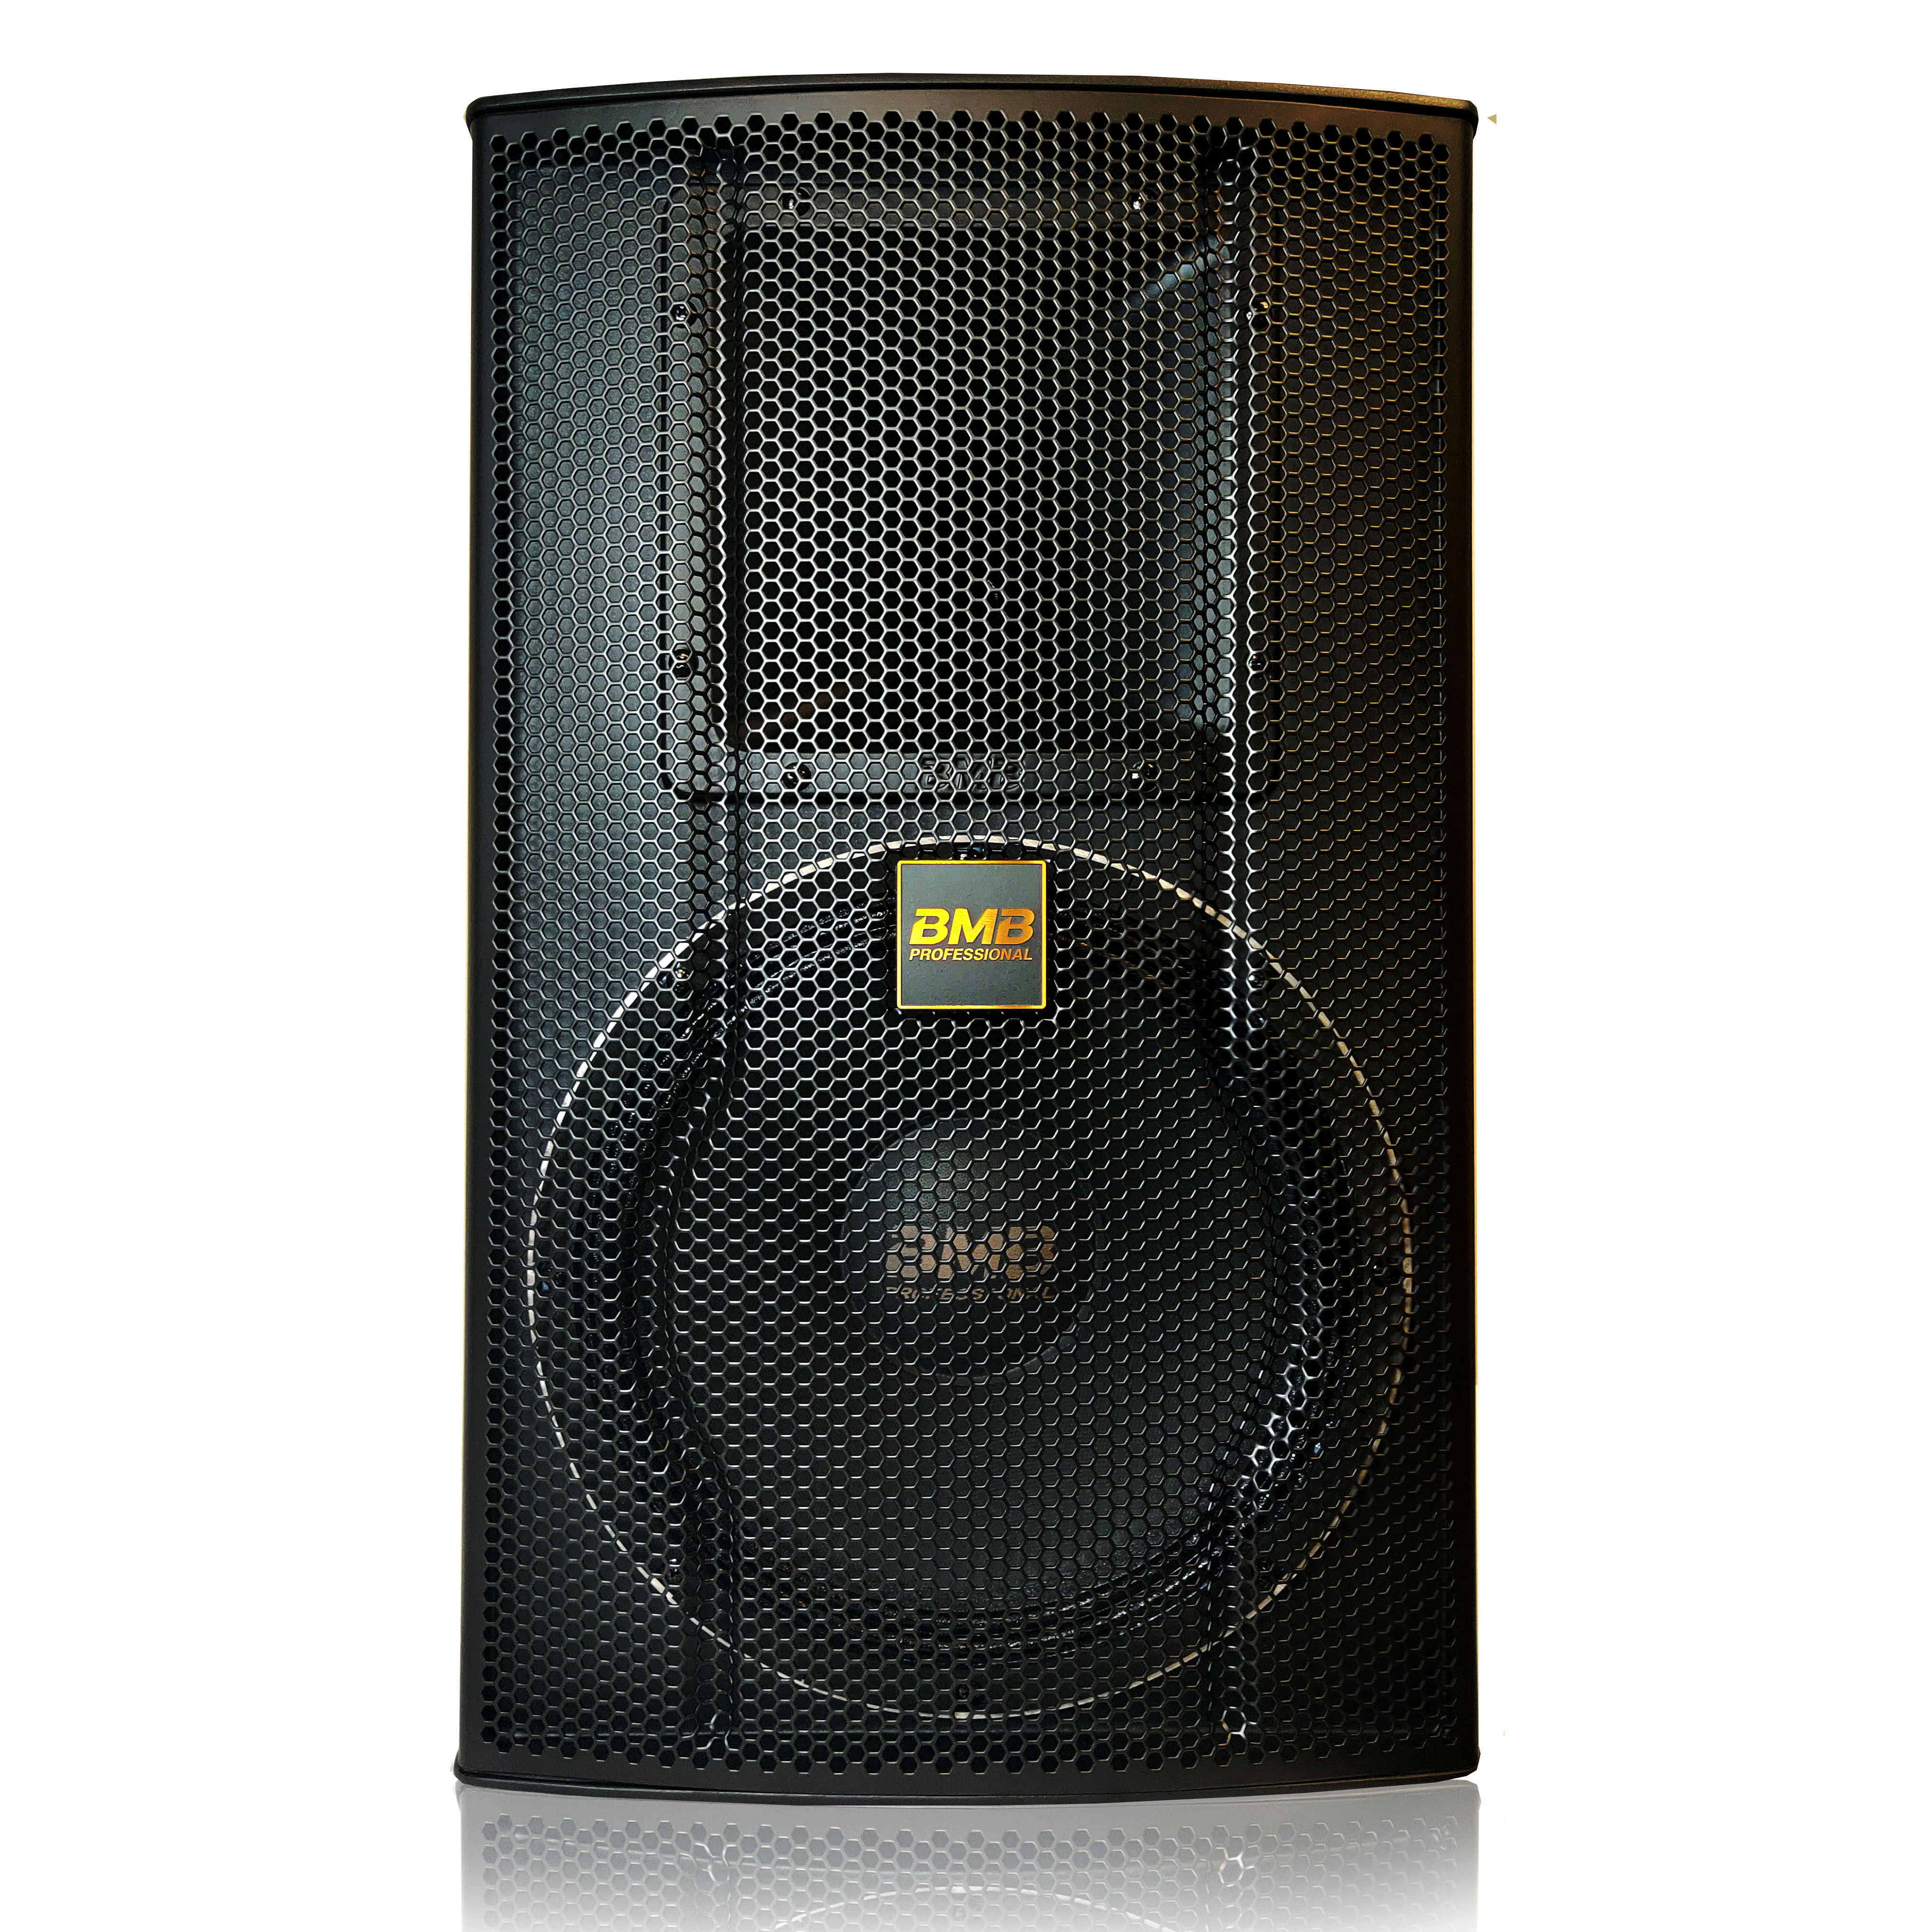 CSS-2012 2,000W Bass Reflex Speakers